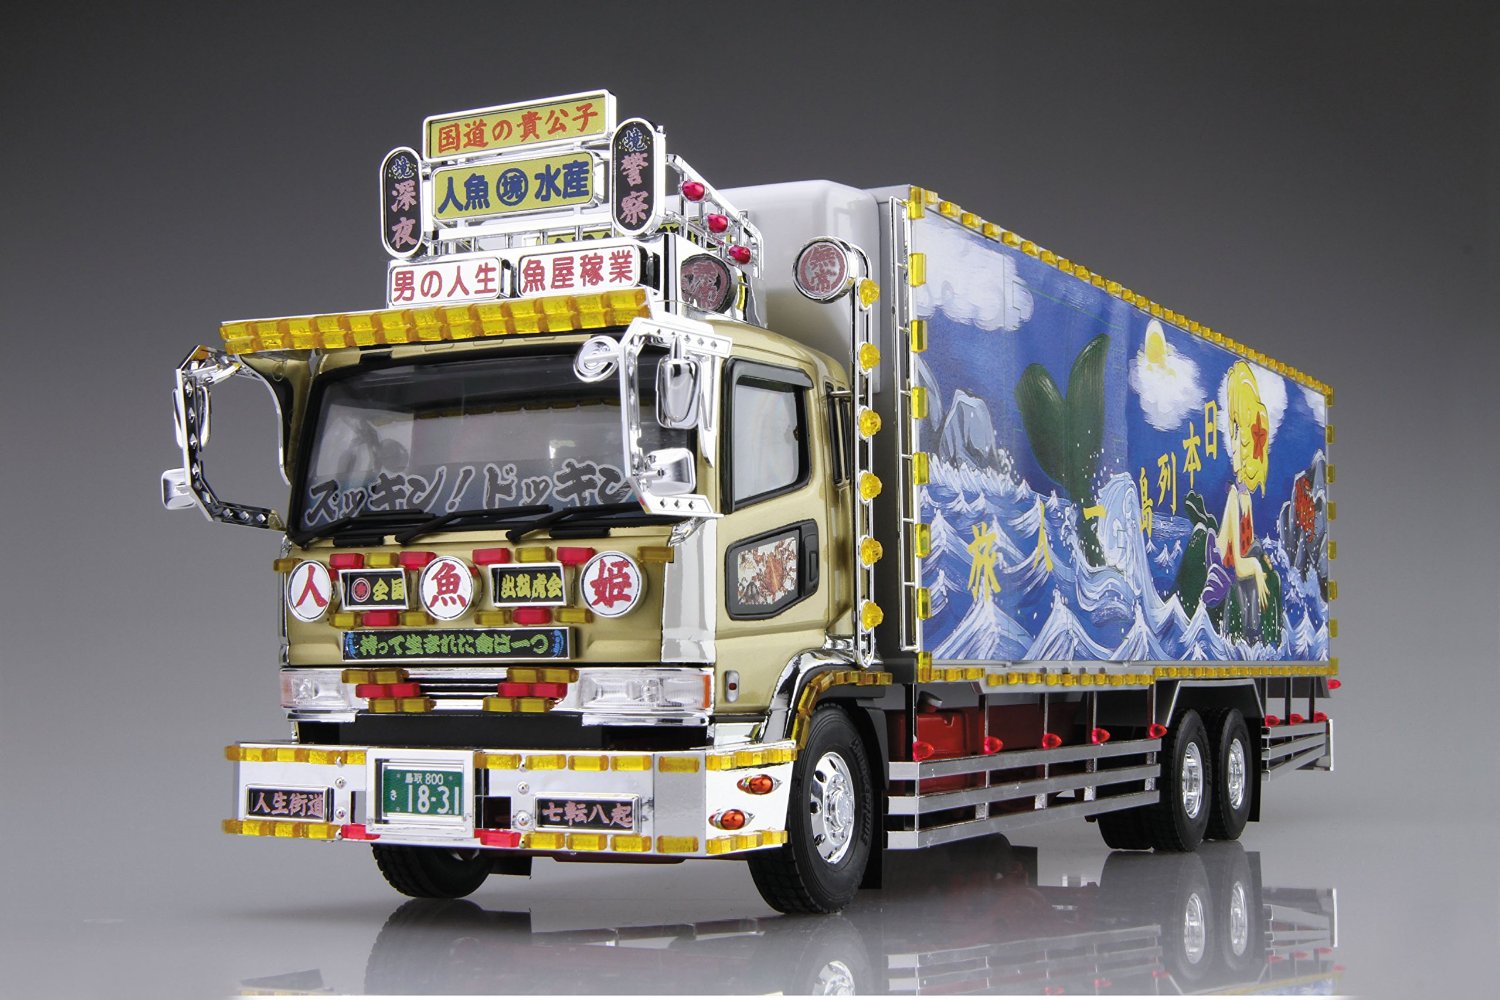 Decotra Vol.38 Ningyohime (Large Freezer Truck)